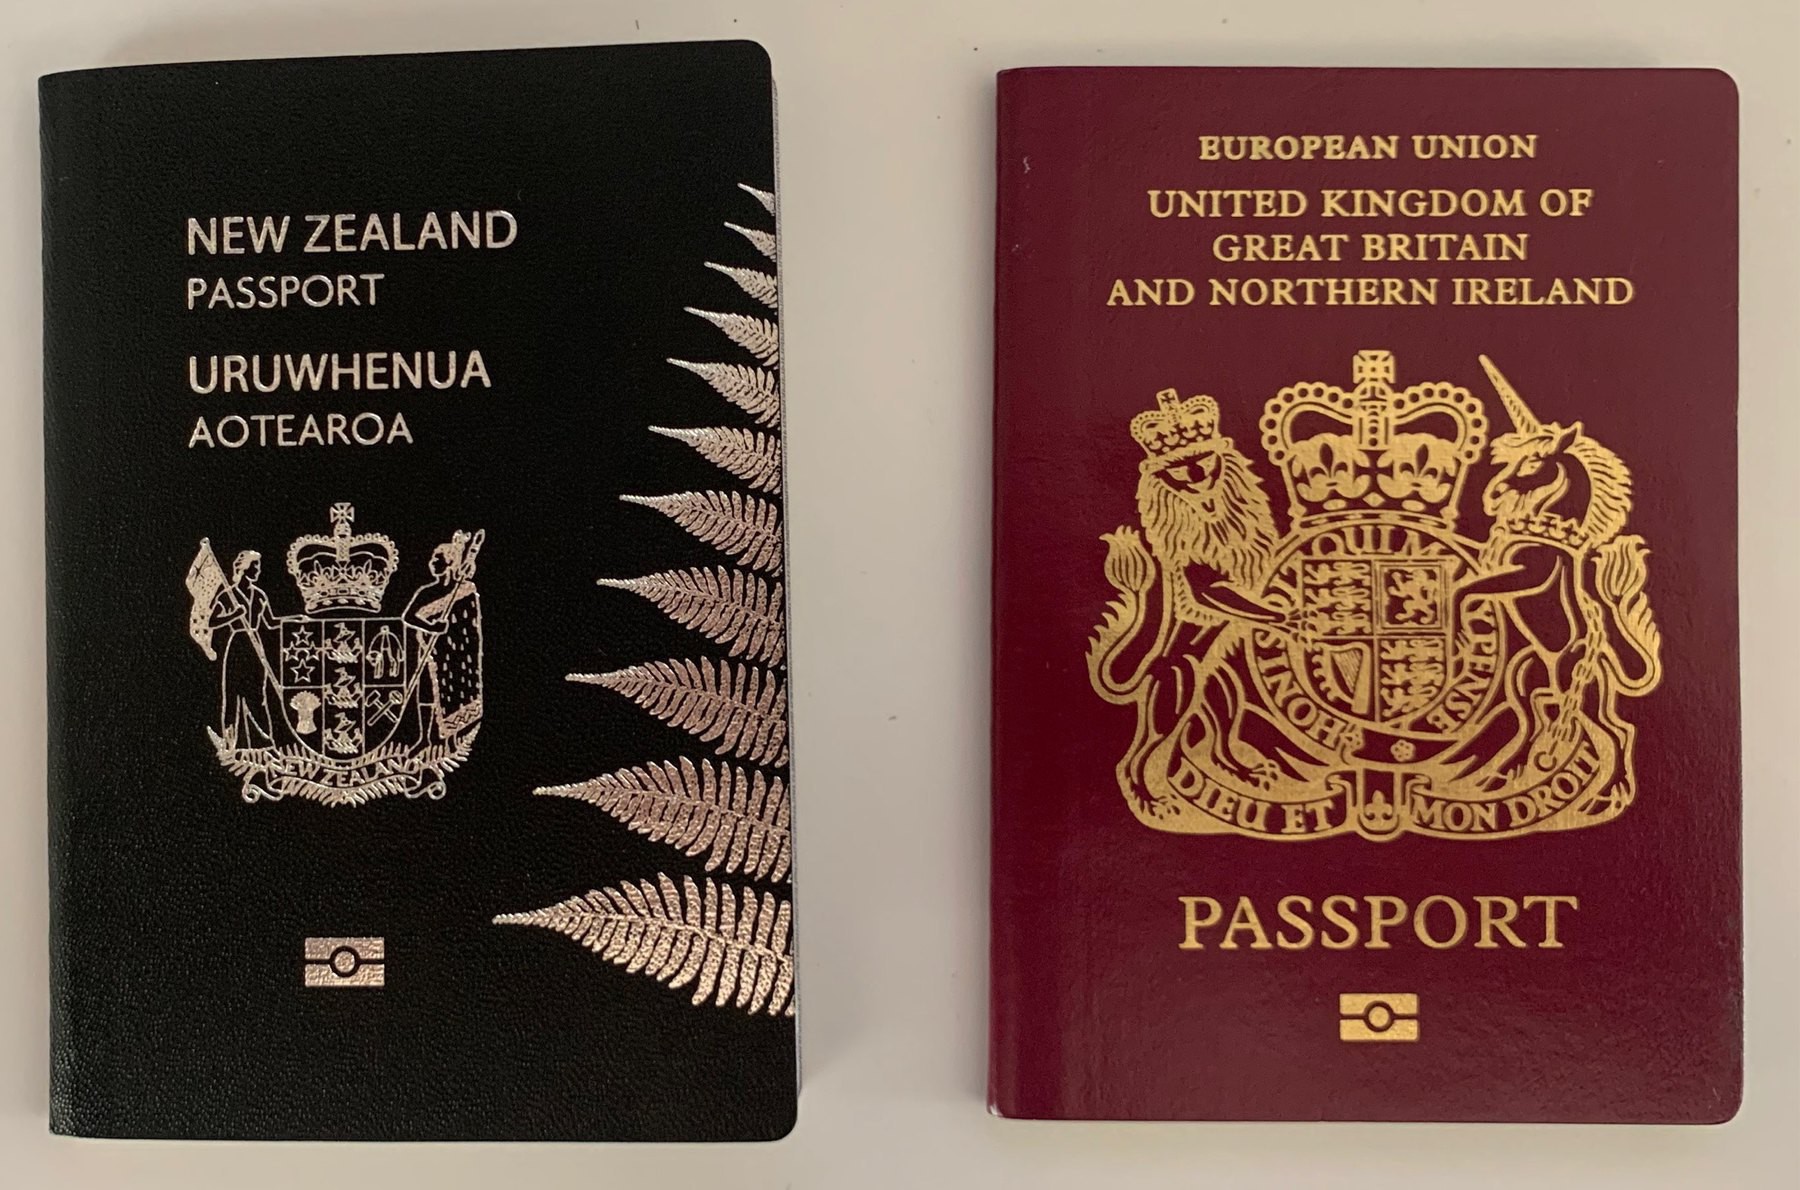 My new Zealand passport next to my British passport, which is now horrifically less useful. 